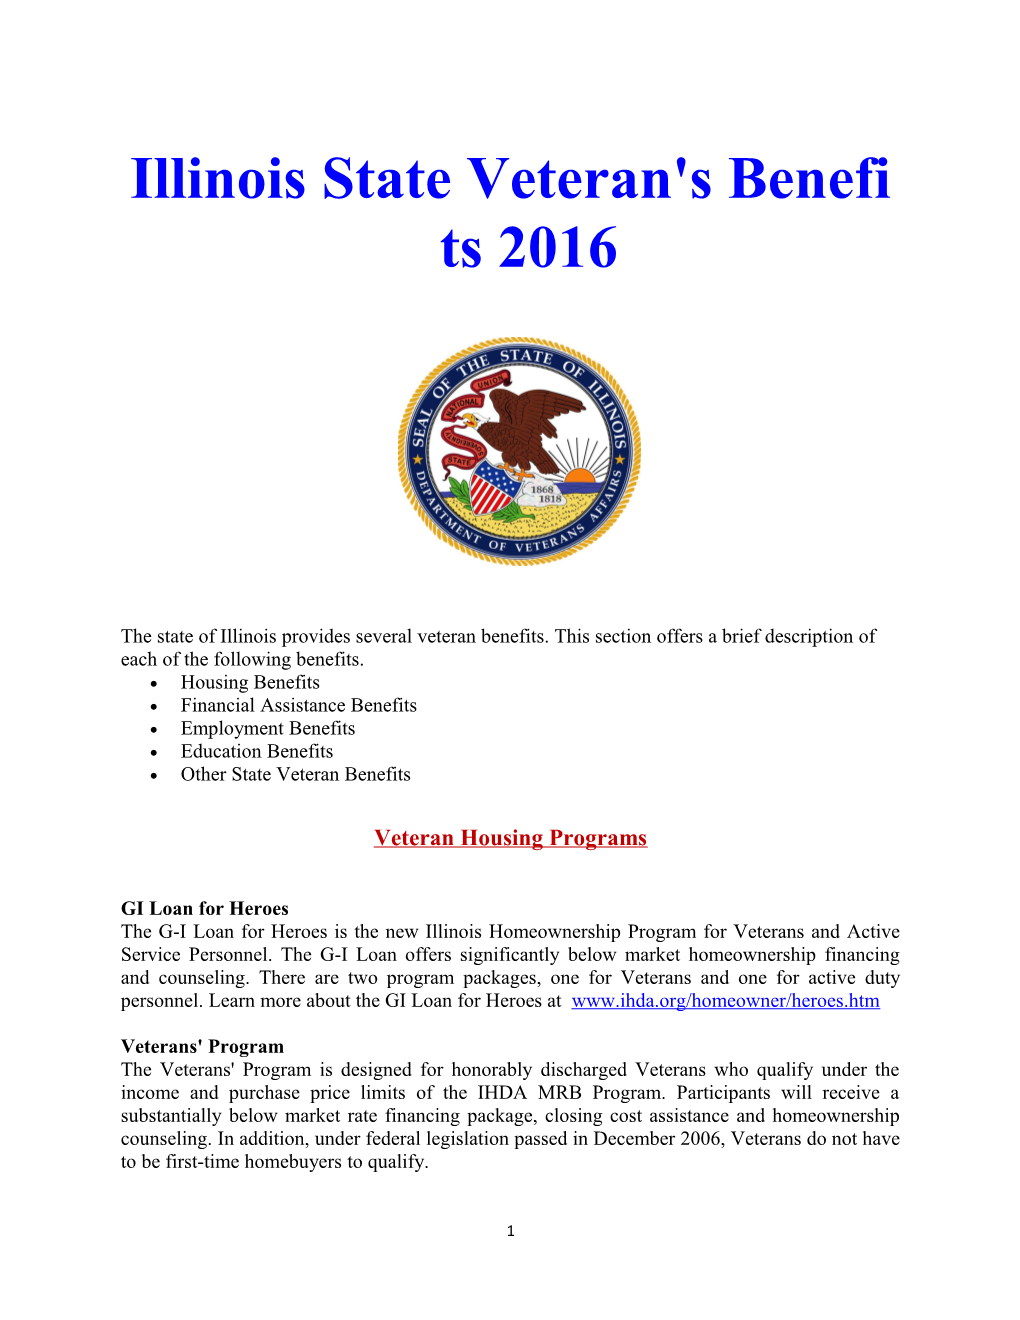 Illinois State Veteran's Benefits 2016